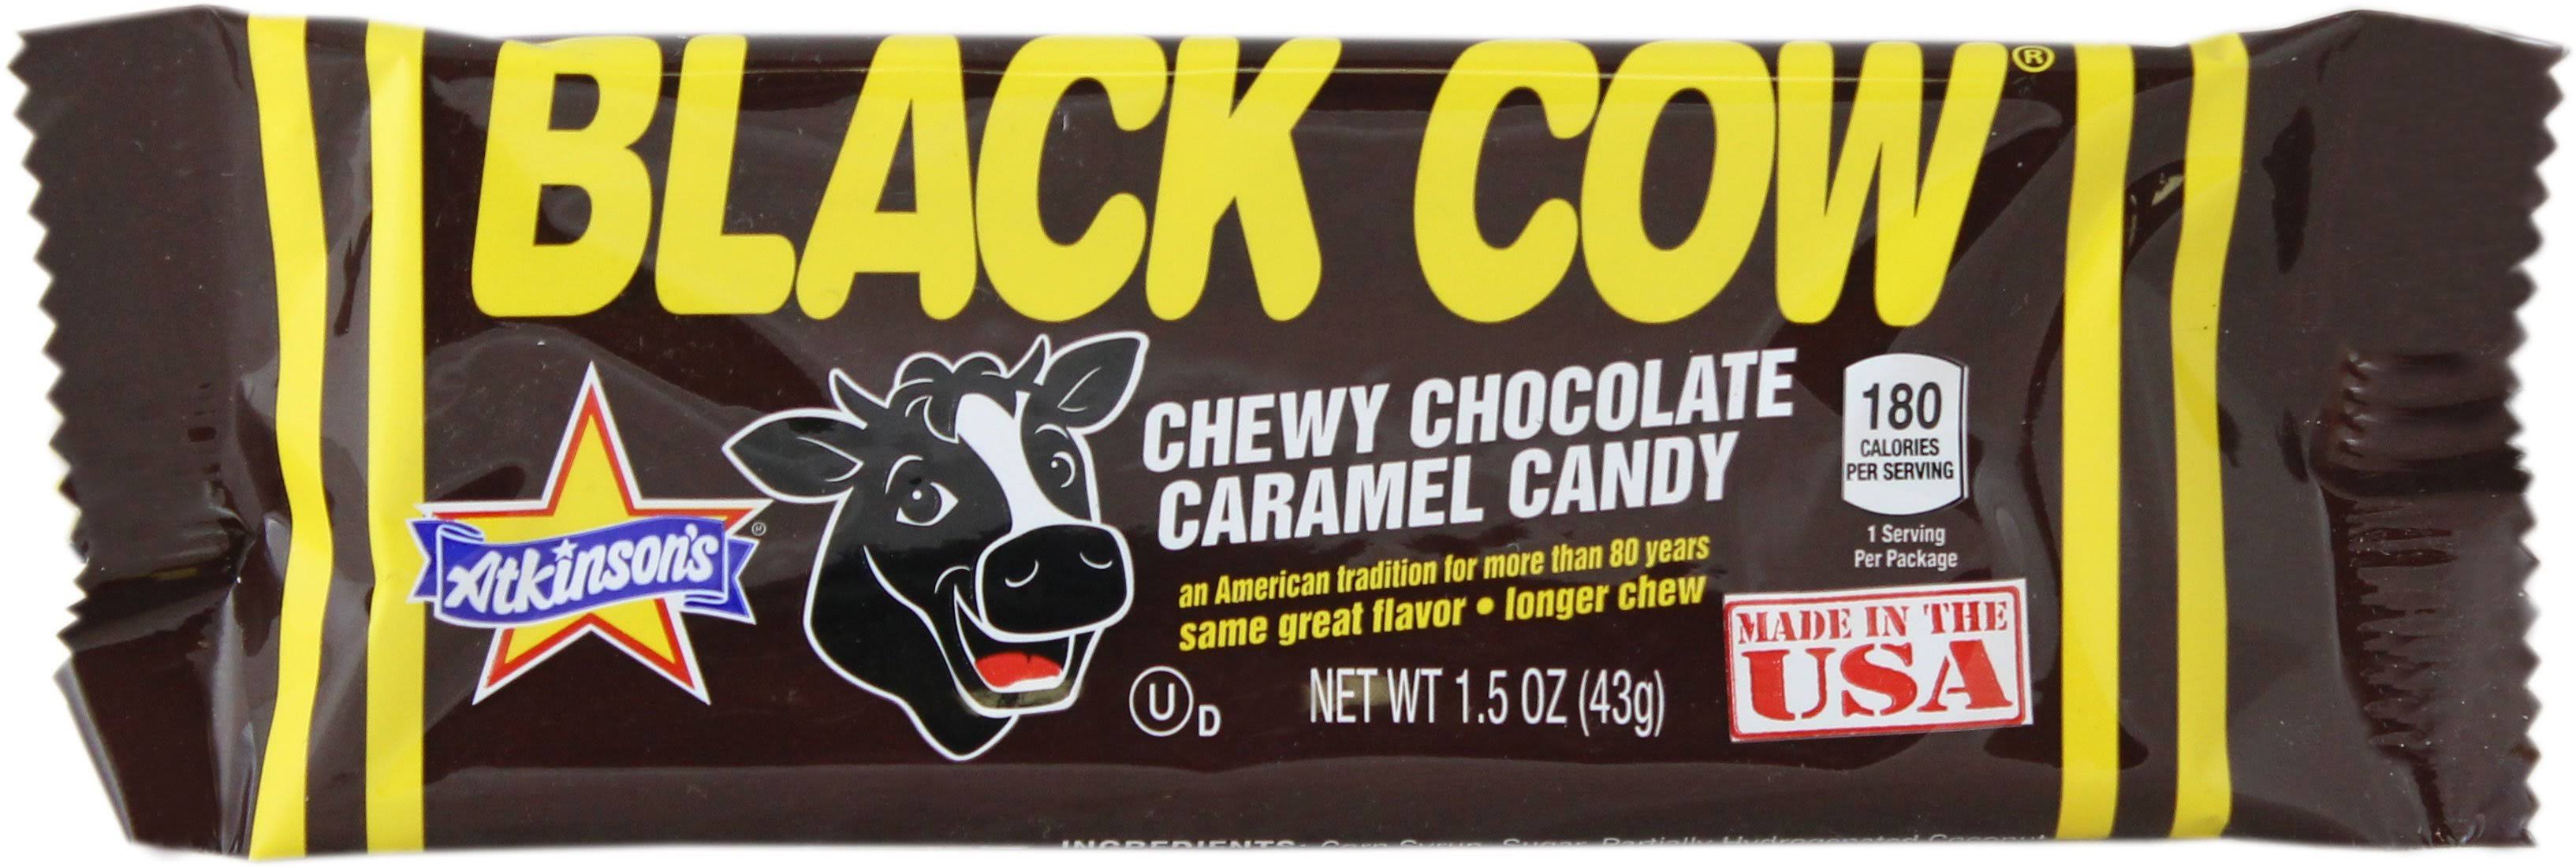 Black Cow Candy Bar - Chewy Chocolate Caramel